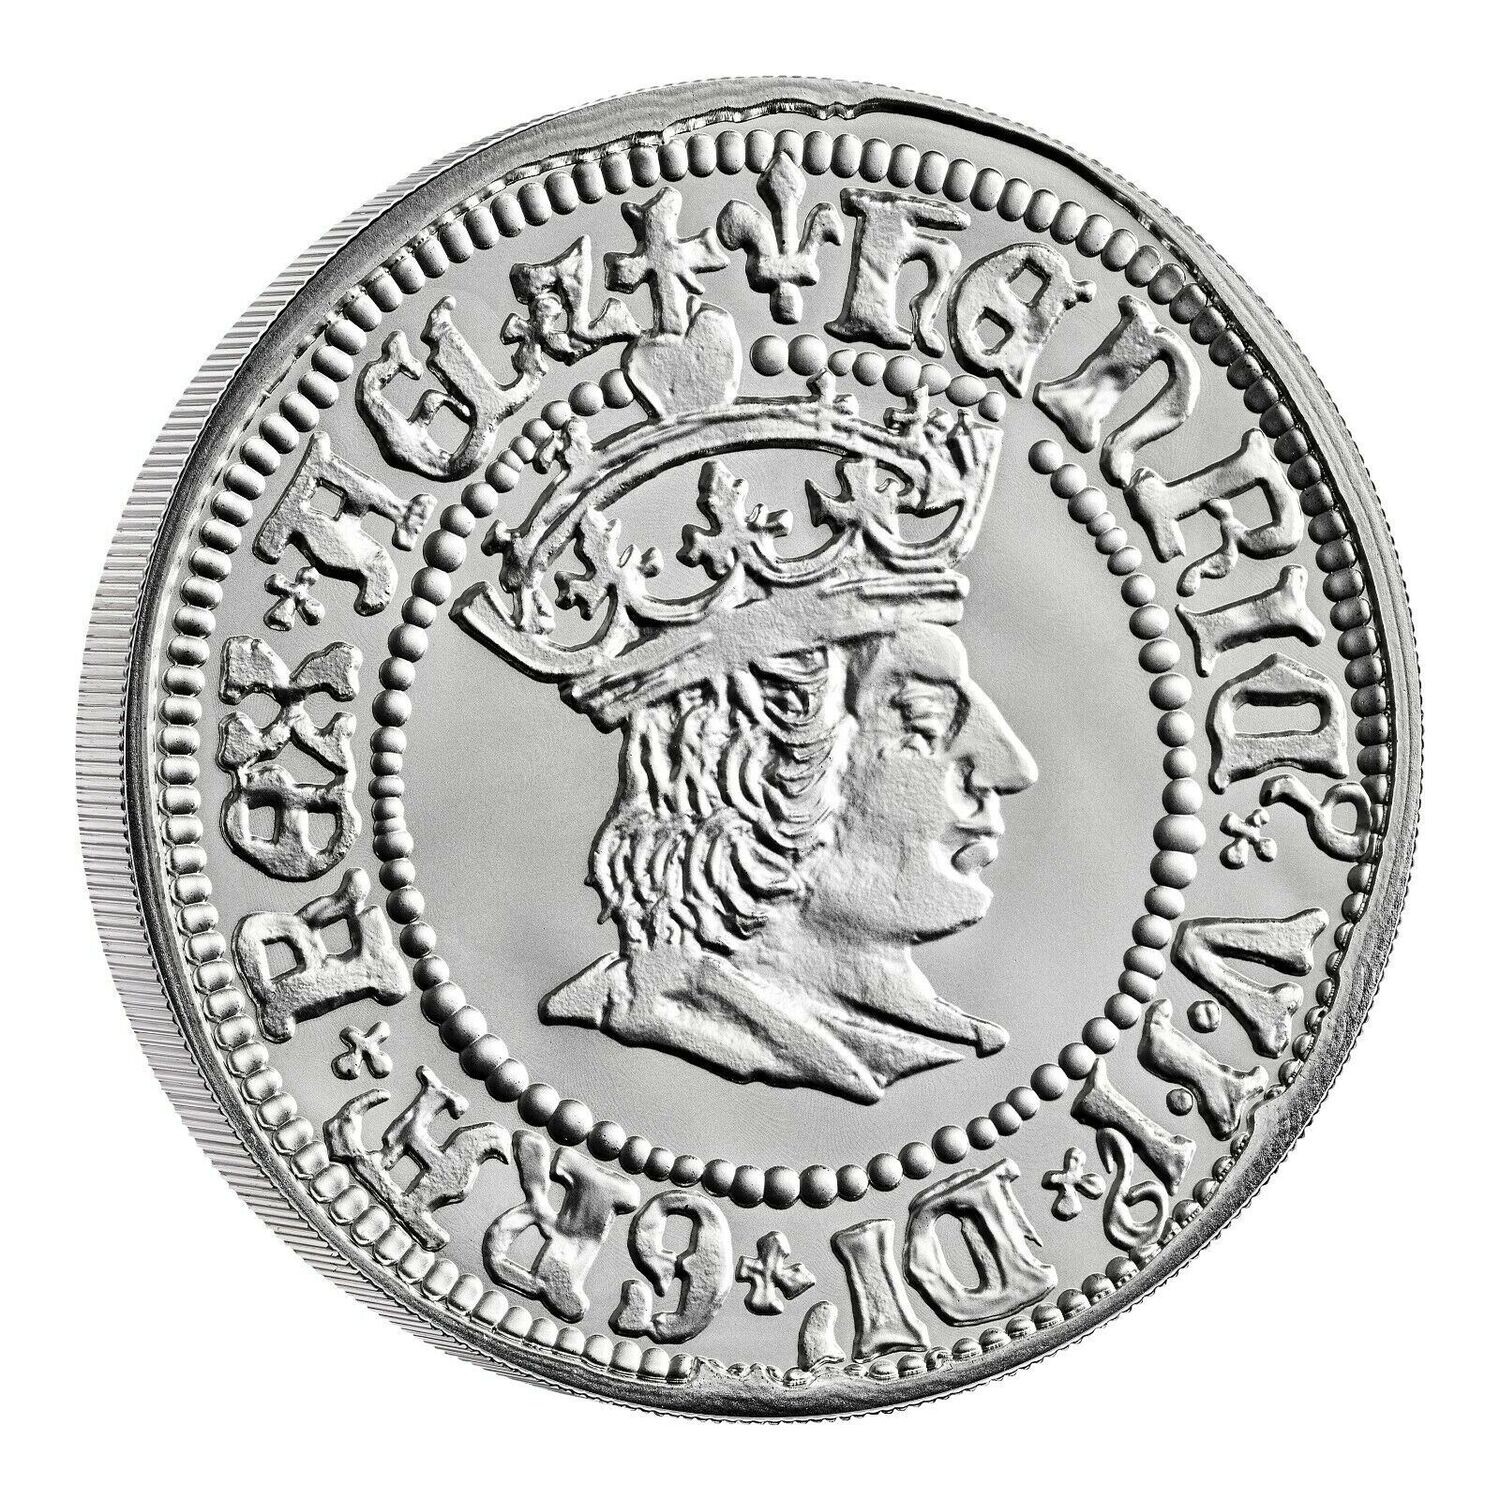 2022 British Monarchs King Henry VII £10 Silver Proof 5oz Coin Box Coa